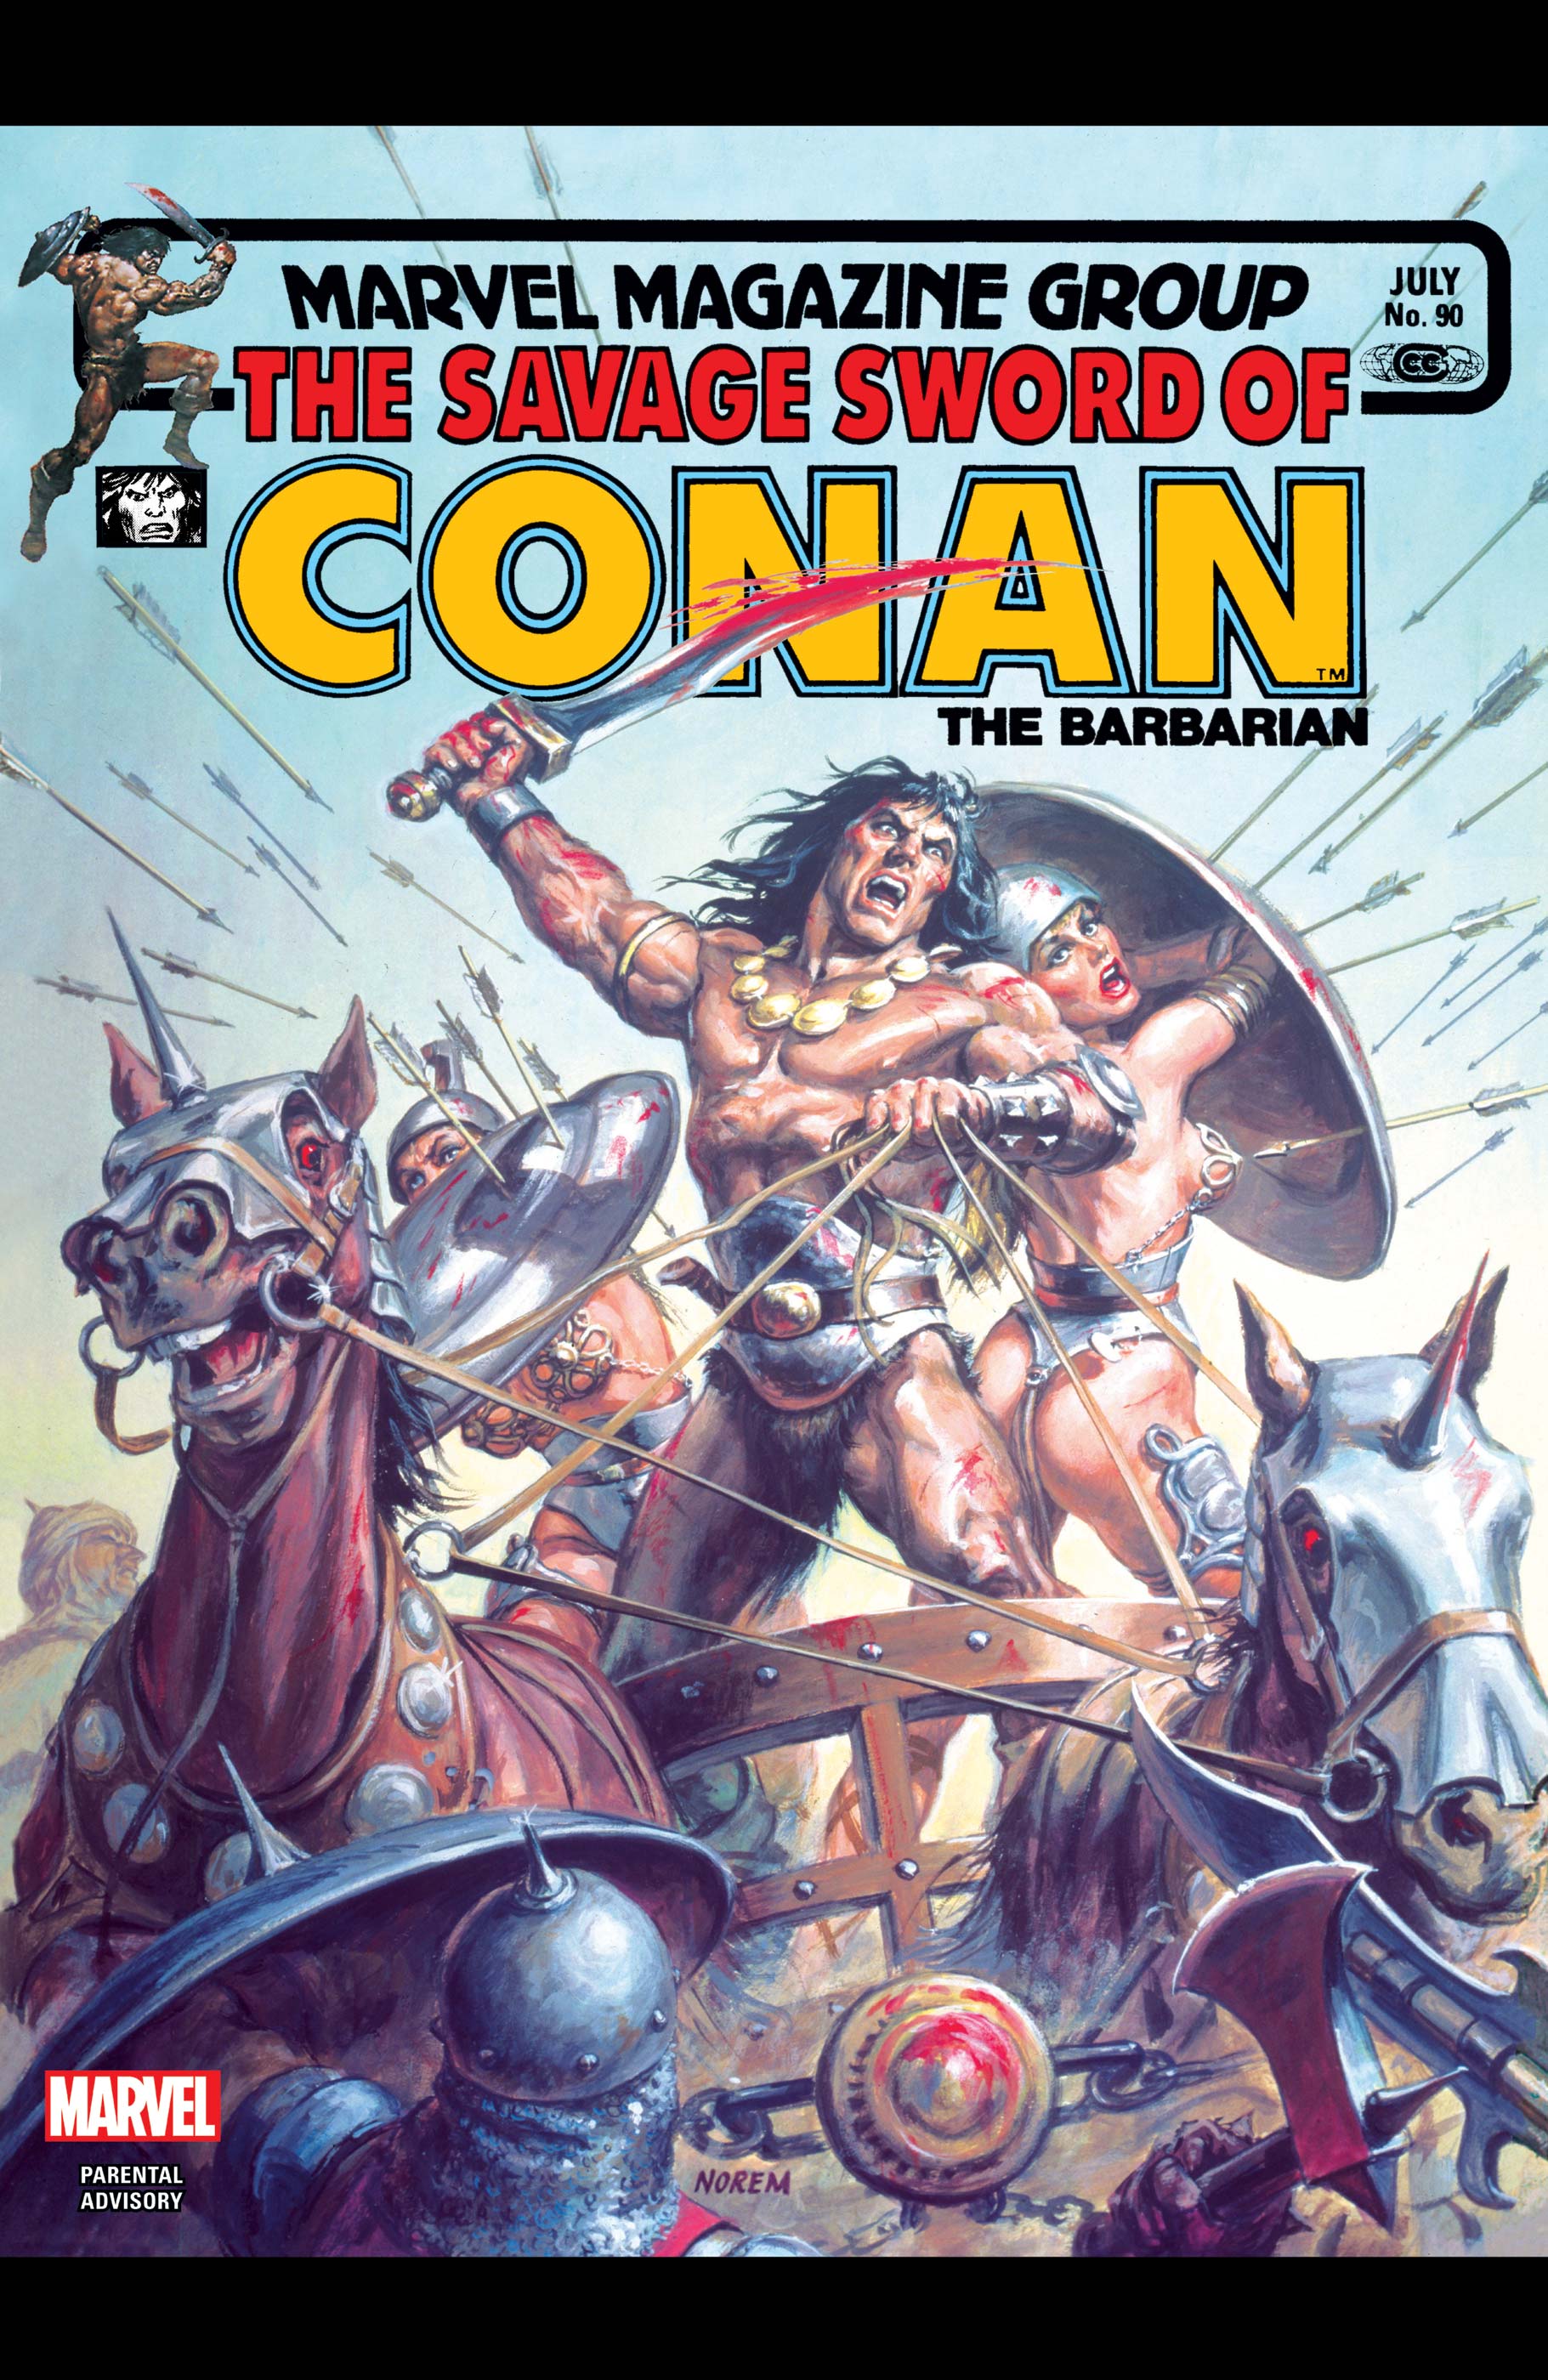 The Savage Sword of Conan (1974) #90